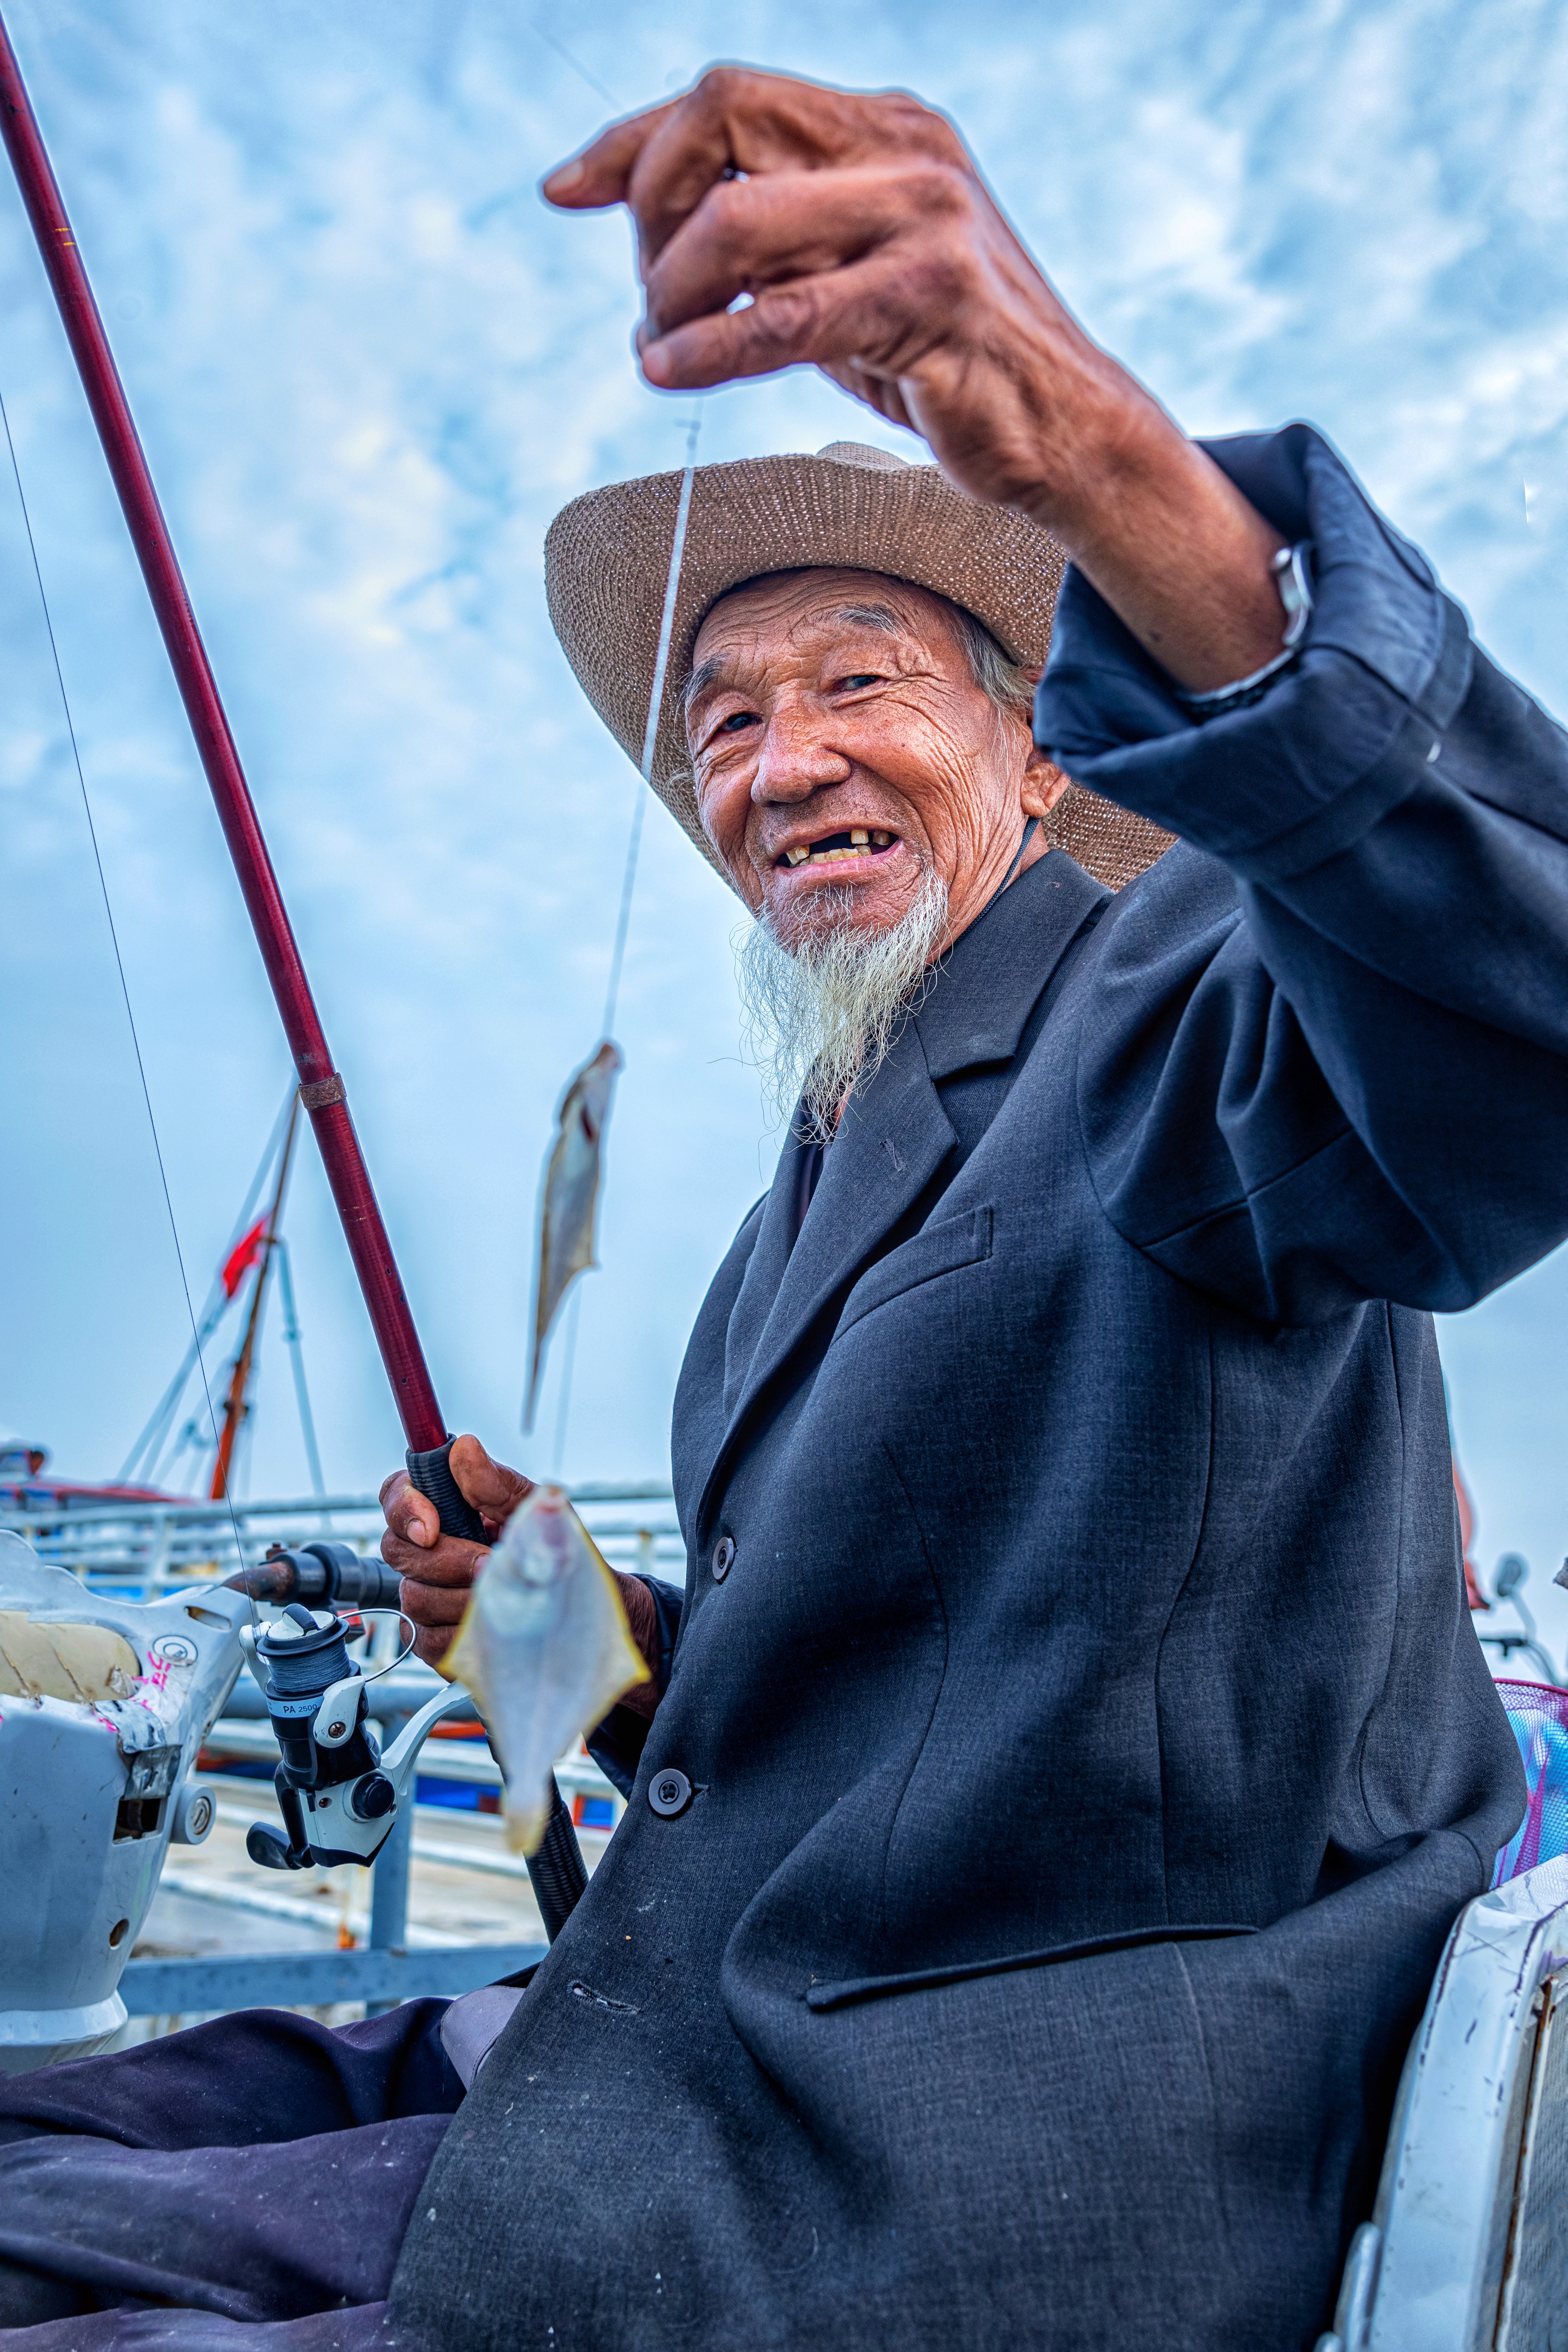 hk_c_開心就好 2020年九月份，山東省蓬萊市某海濱碼頭，一位近八十歲的老人在釣魚，一次釣上了二條，魚雖然小，但是收穫的是開心！海石花 coral張建中.jpeg